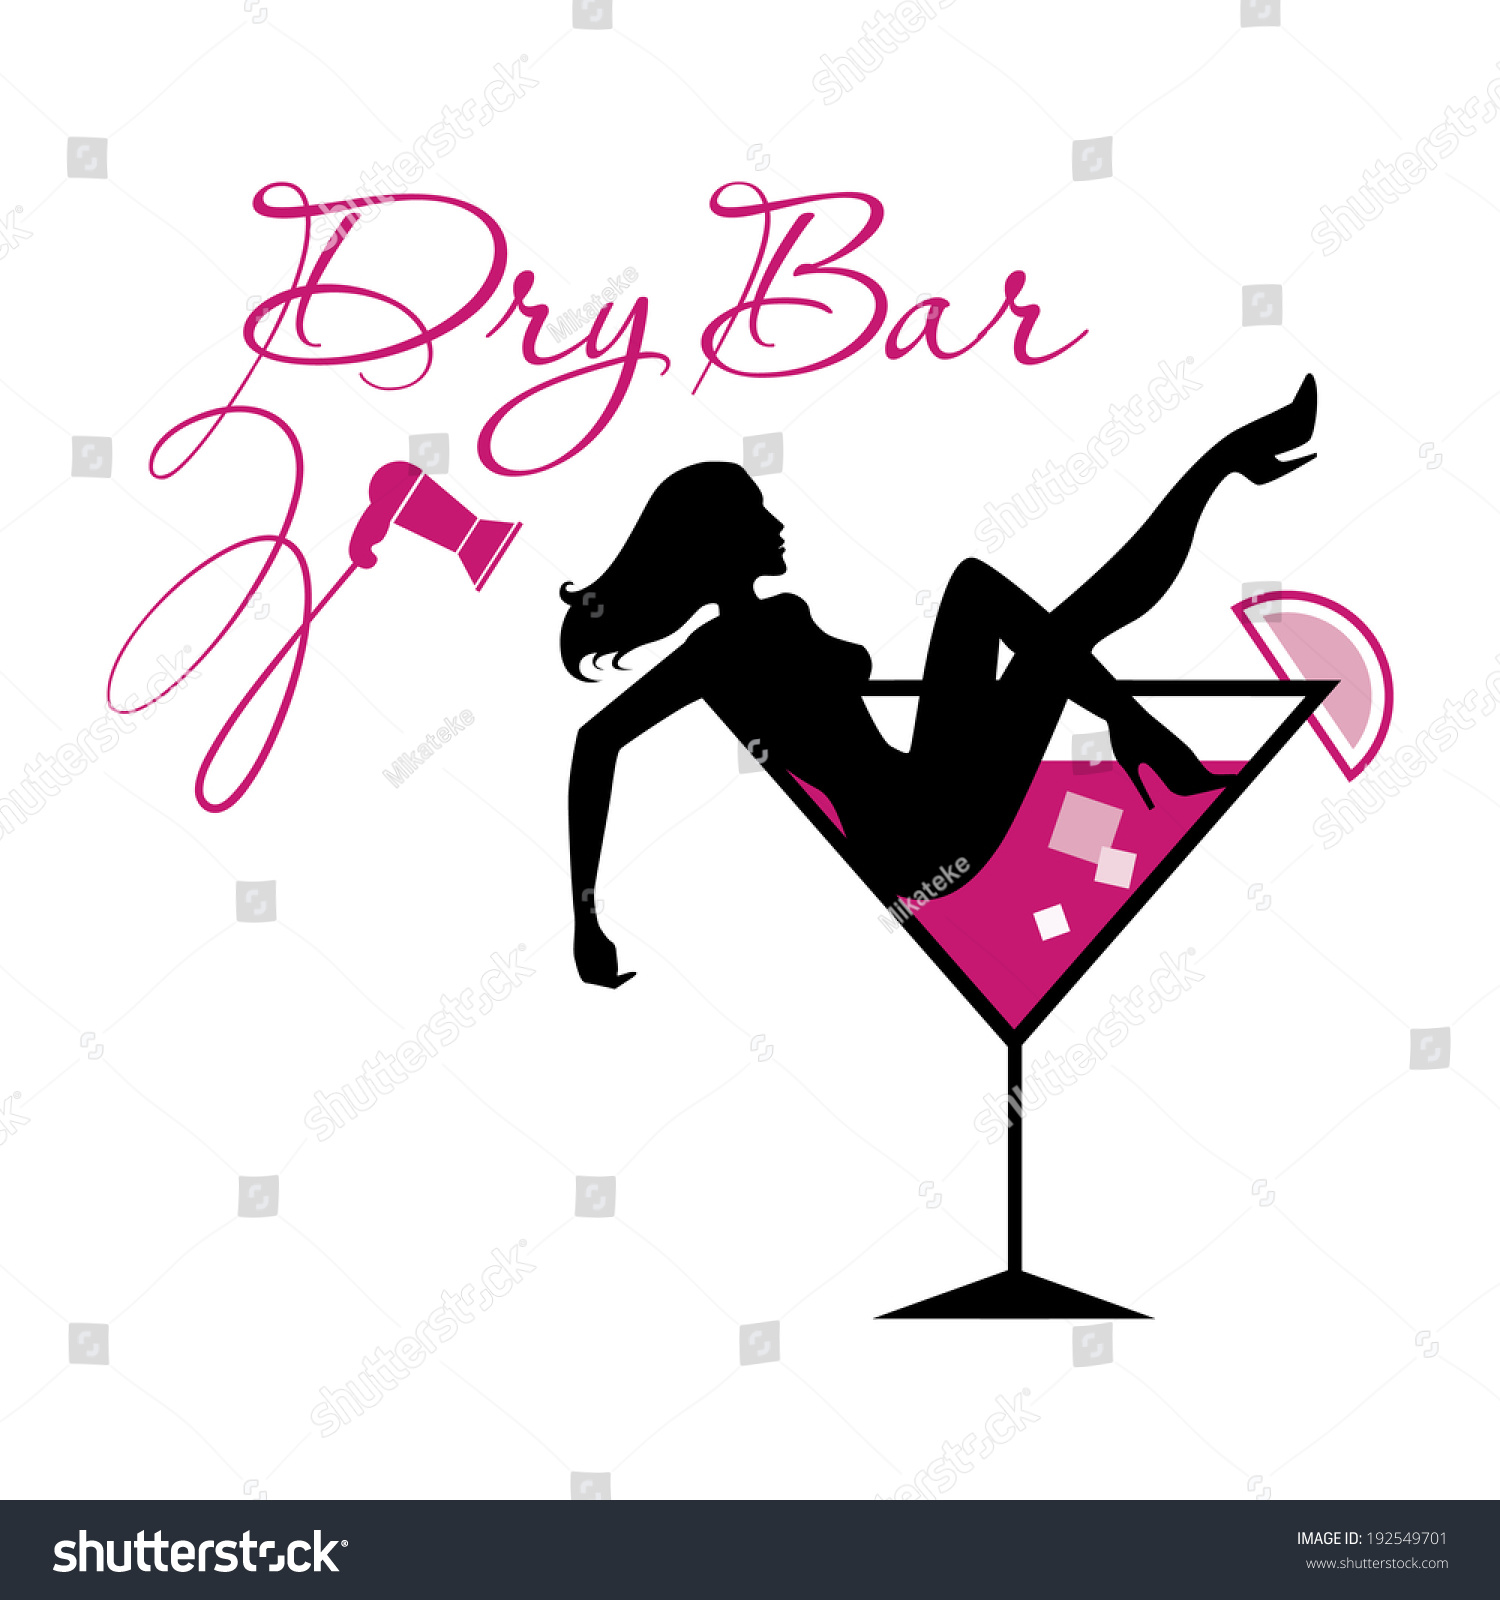 clipart girl in martini glass - photo #4